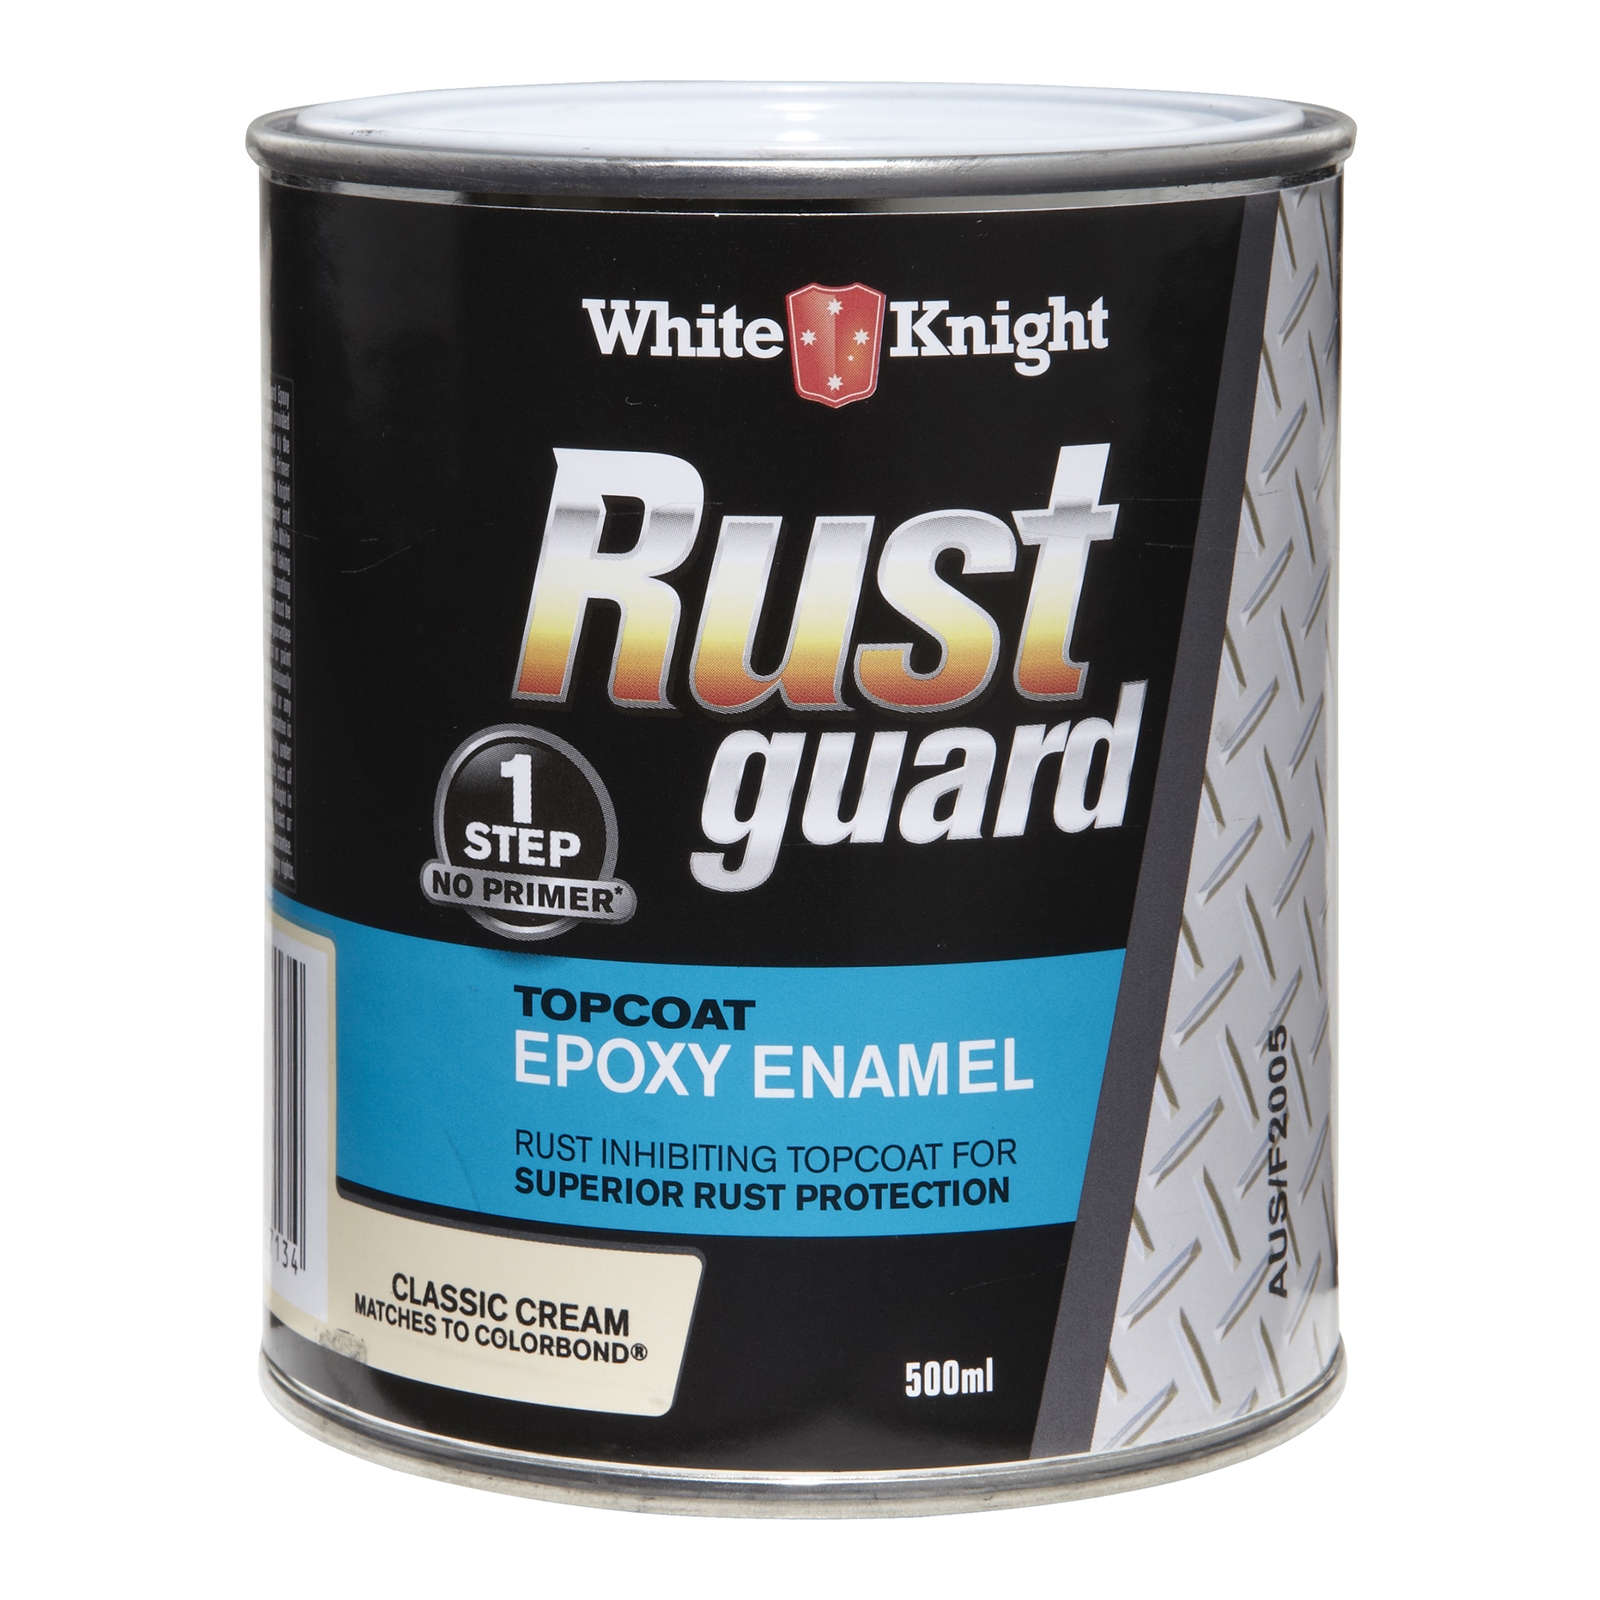 White Knight Rust Guard 500ml Classic Cream Epoxy Enamel Paint